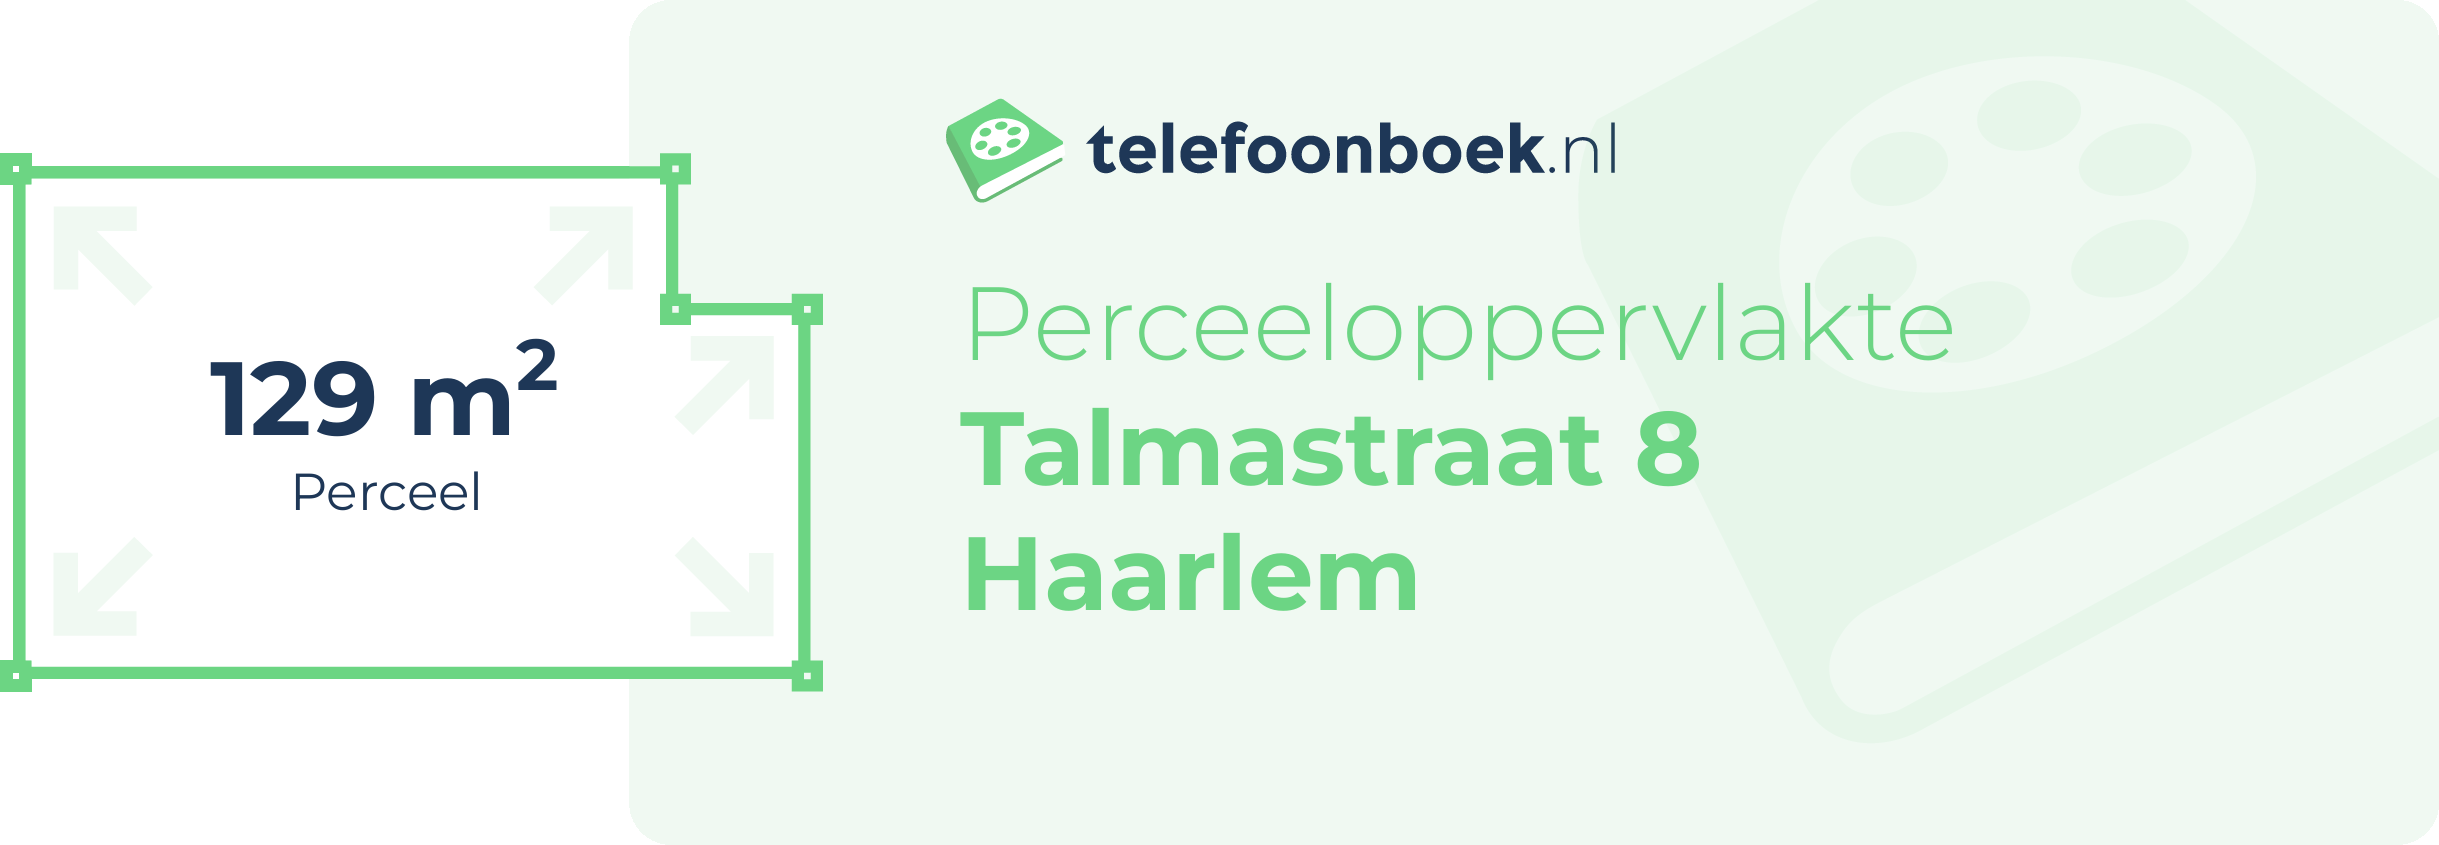 Perceeloppervlakte Talmastraat 8 Haarlem